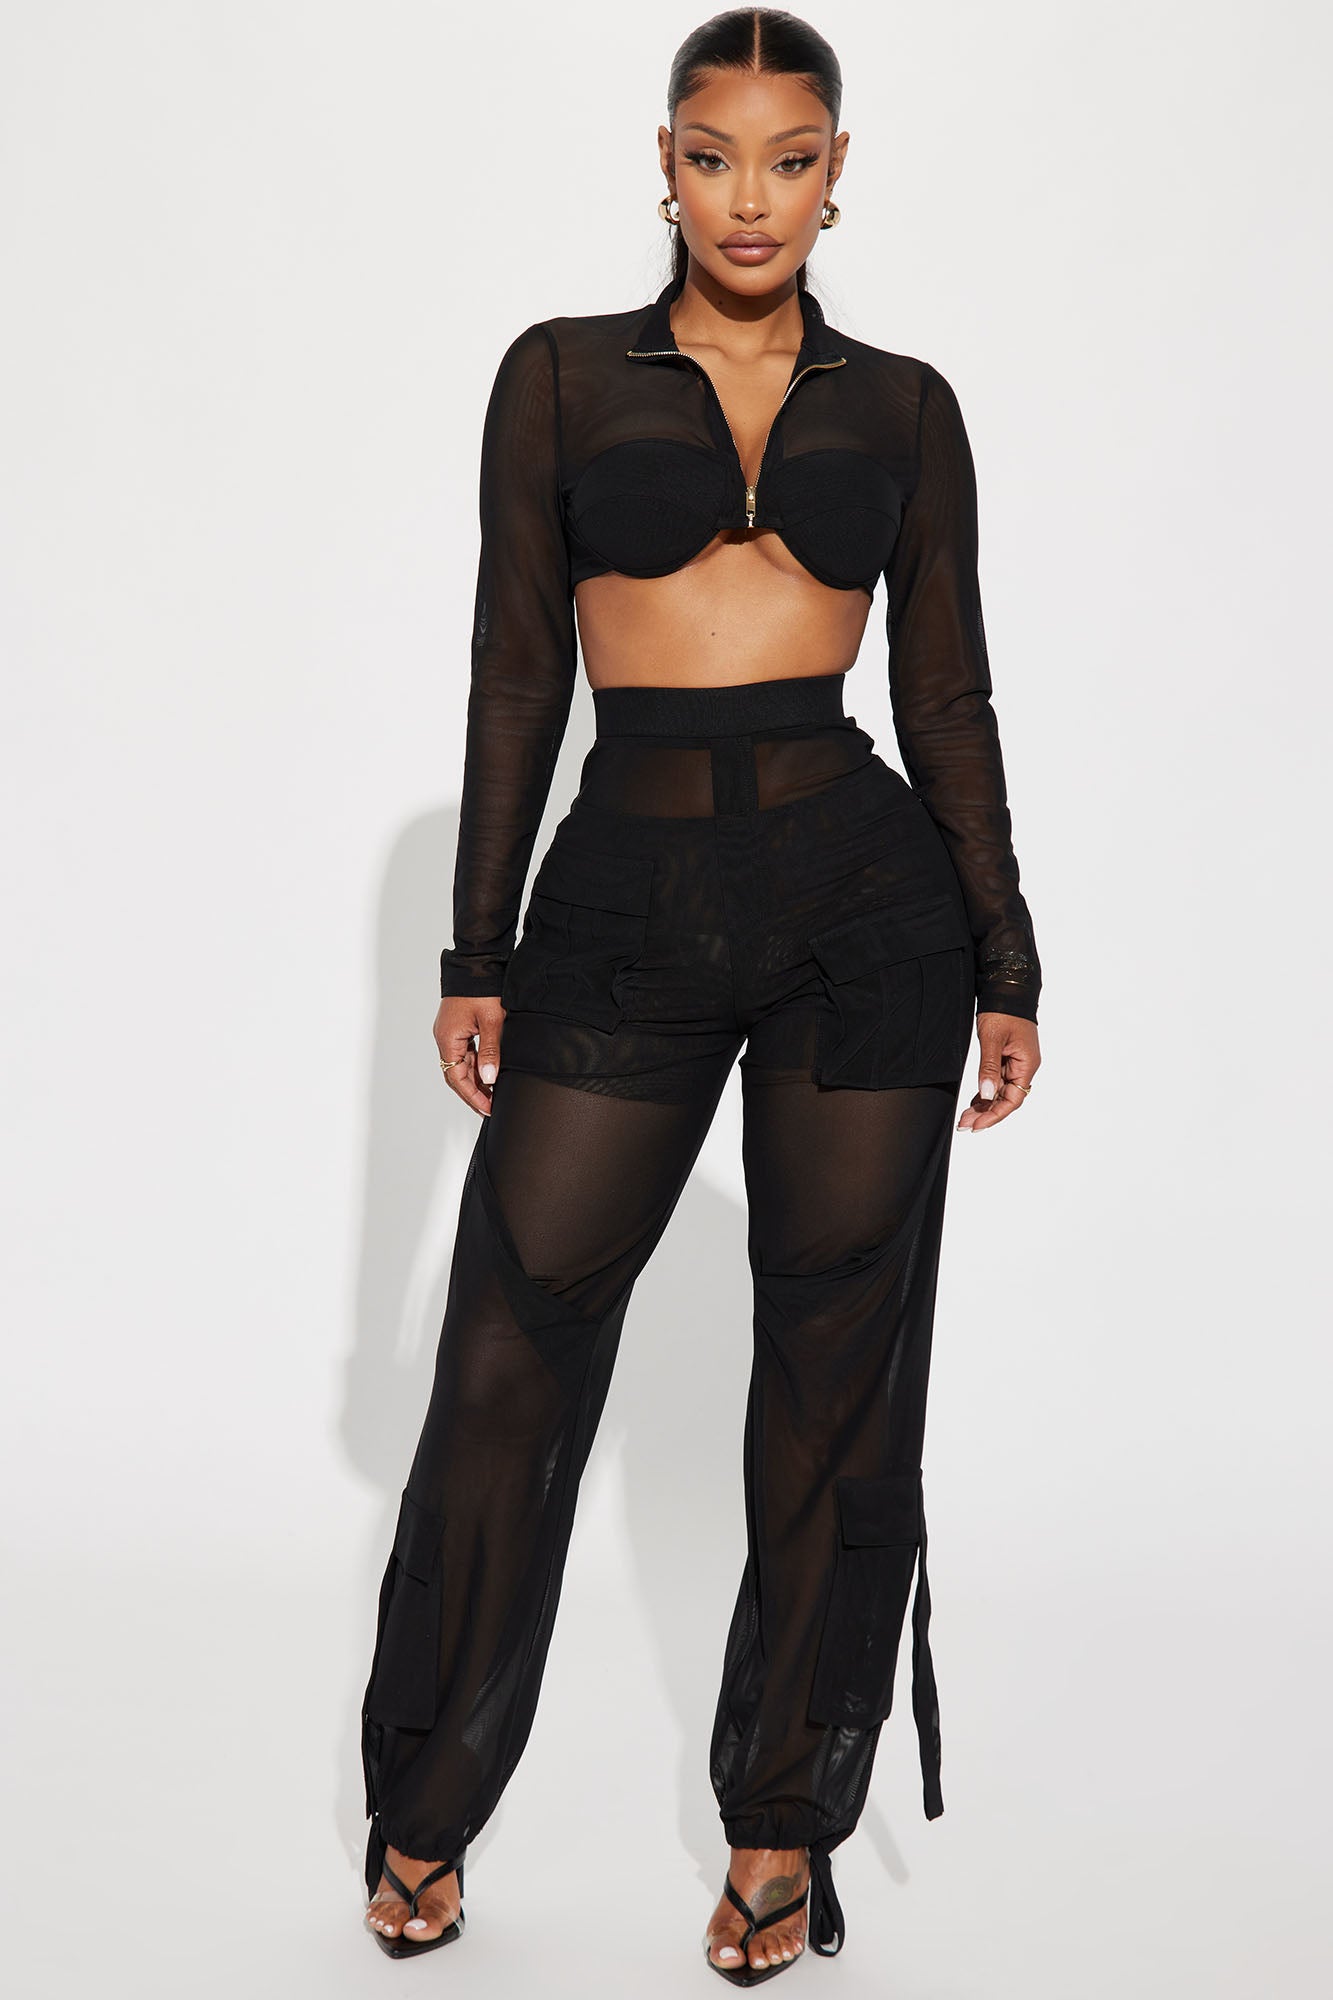 Luxe Living Pant Set - Black, Fashion Nova, Matching Sets